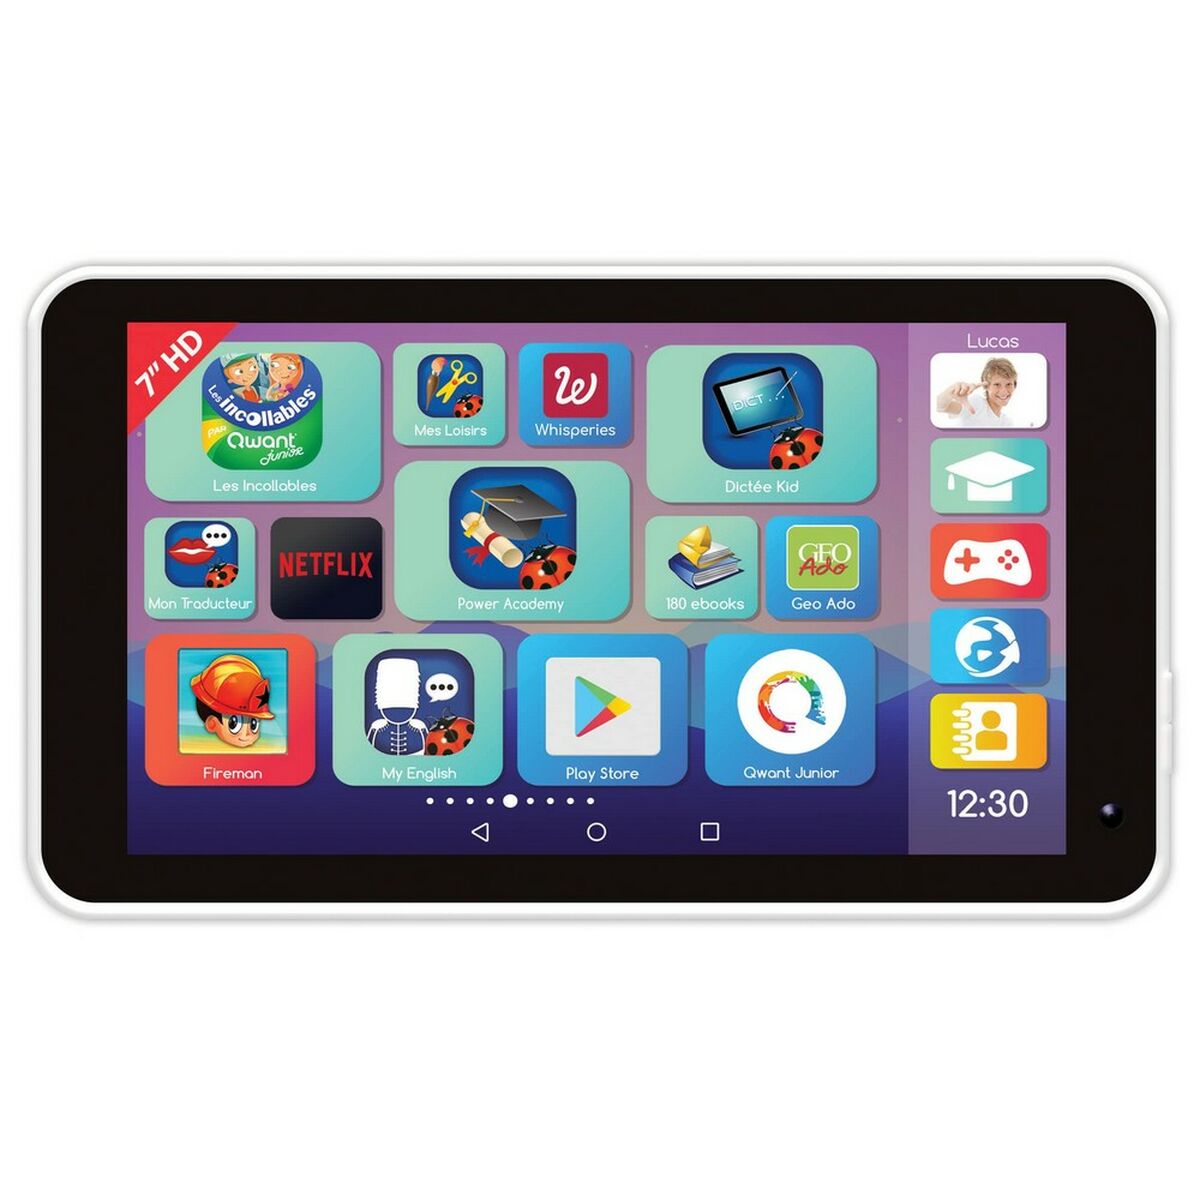 Tablet Interattivo per Bambini Lexibook LexiTab Master 7 TL70FR Azzurro